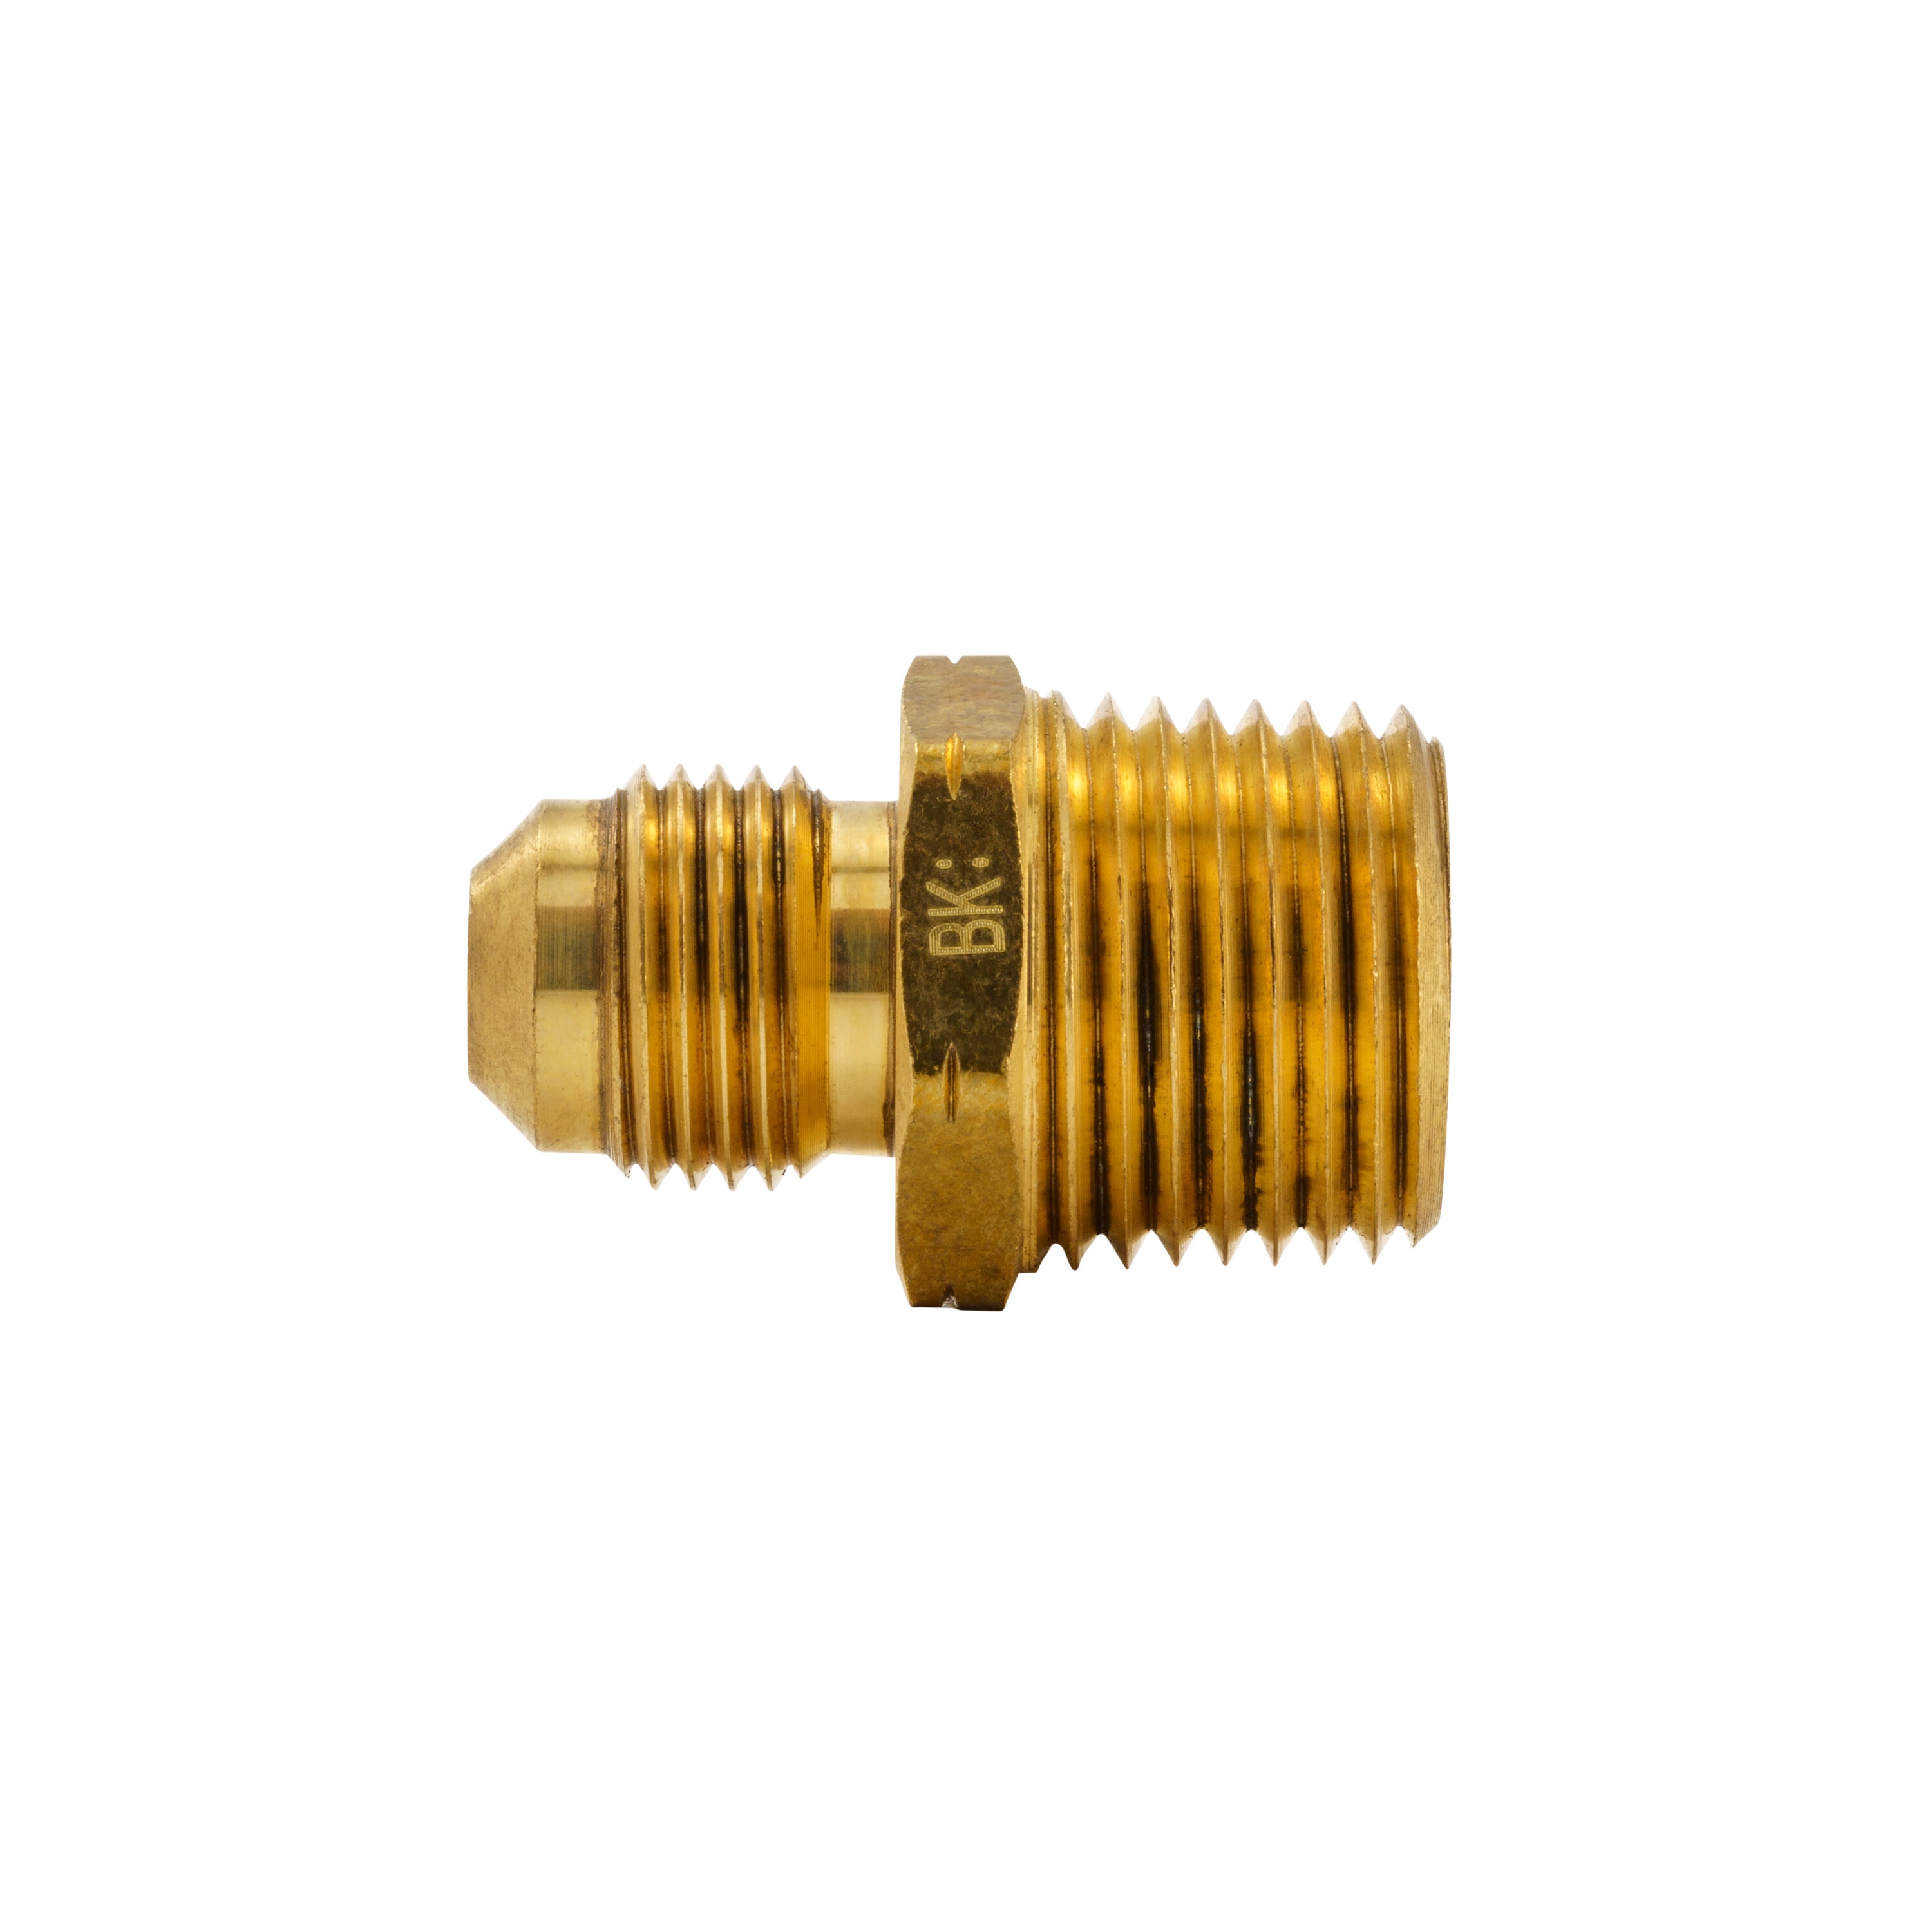 Brassfinders: Polished Brass Flat U Channel (3/8in x 3/8in for 1